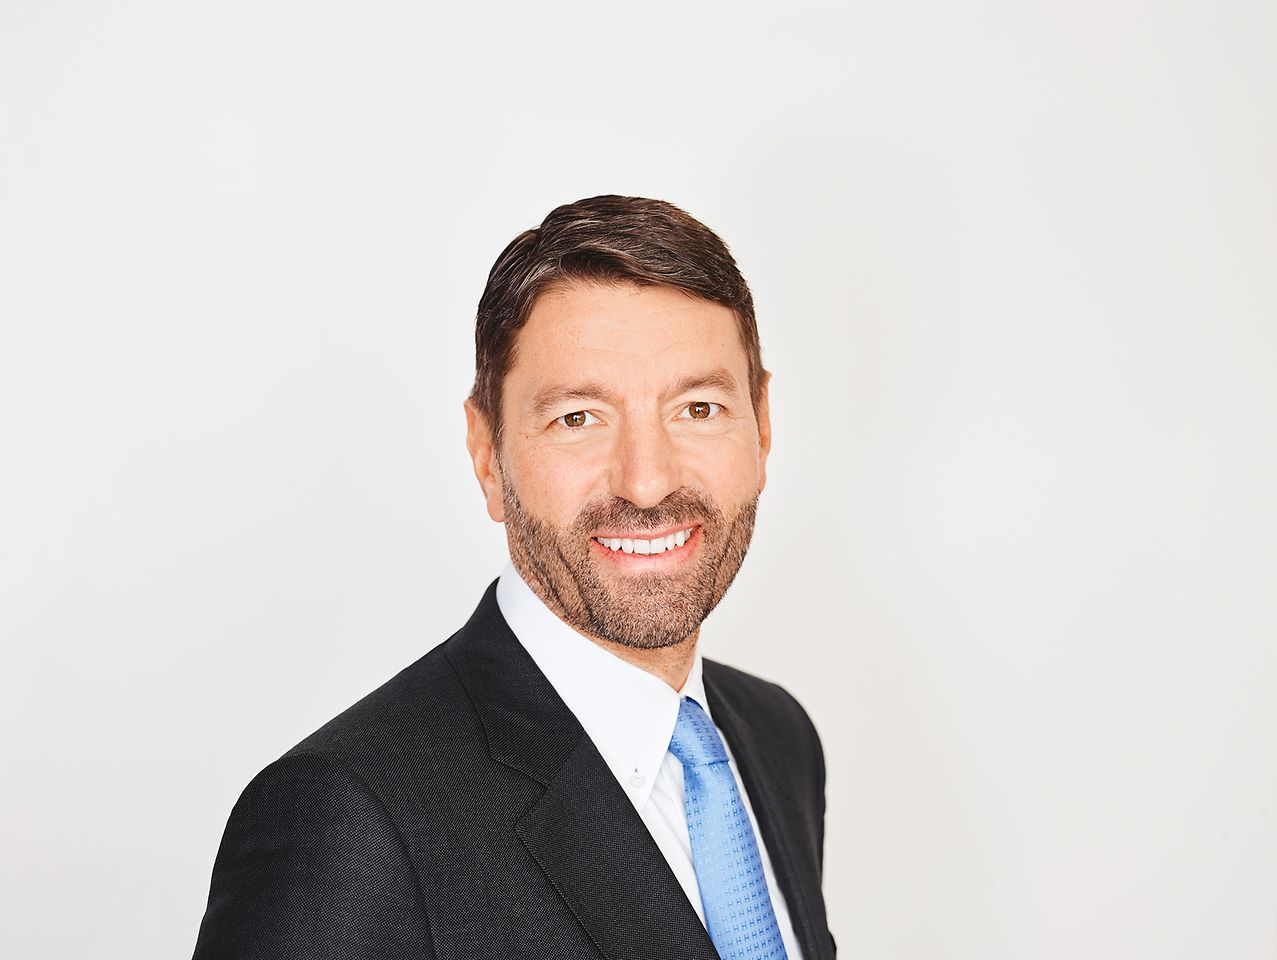 Kasper Rorsted - Henkel CEO.JPG